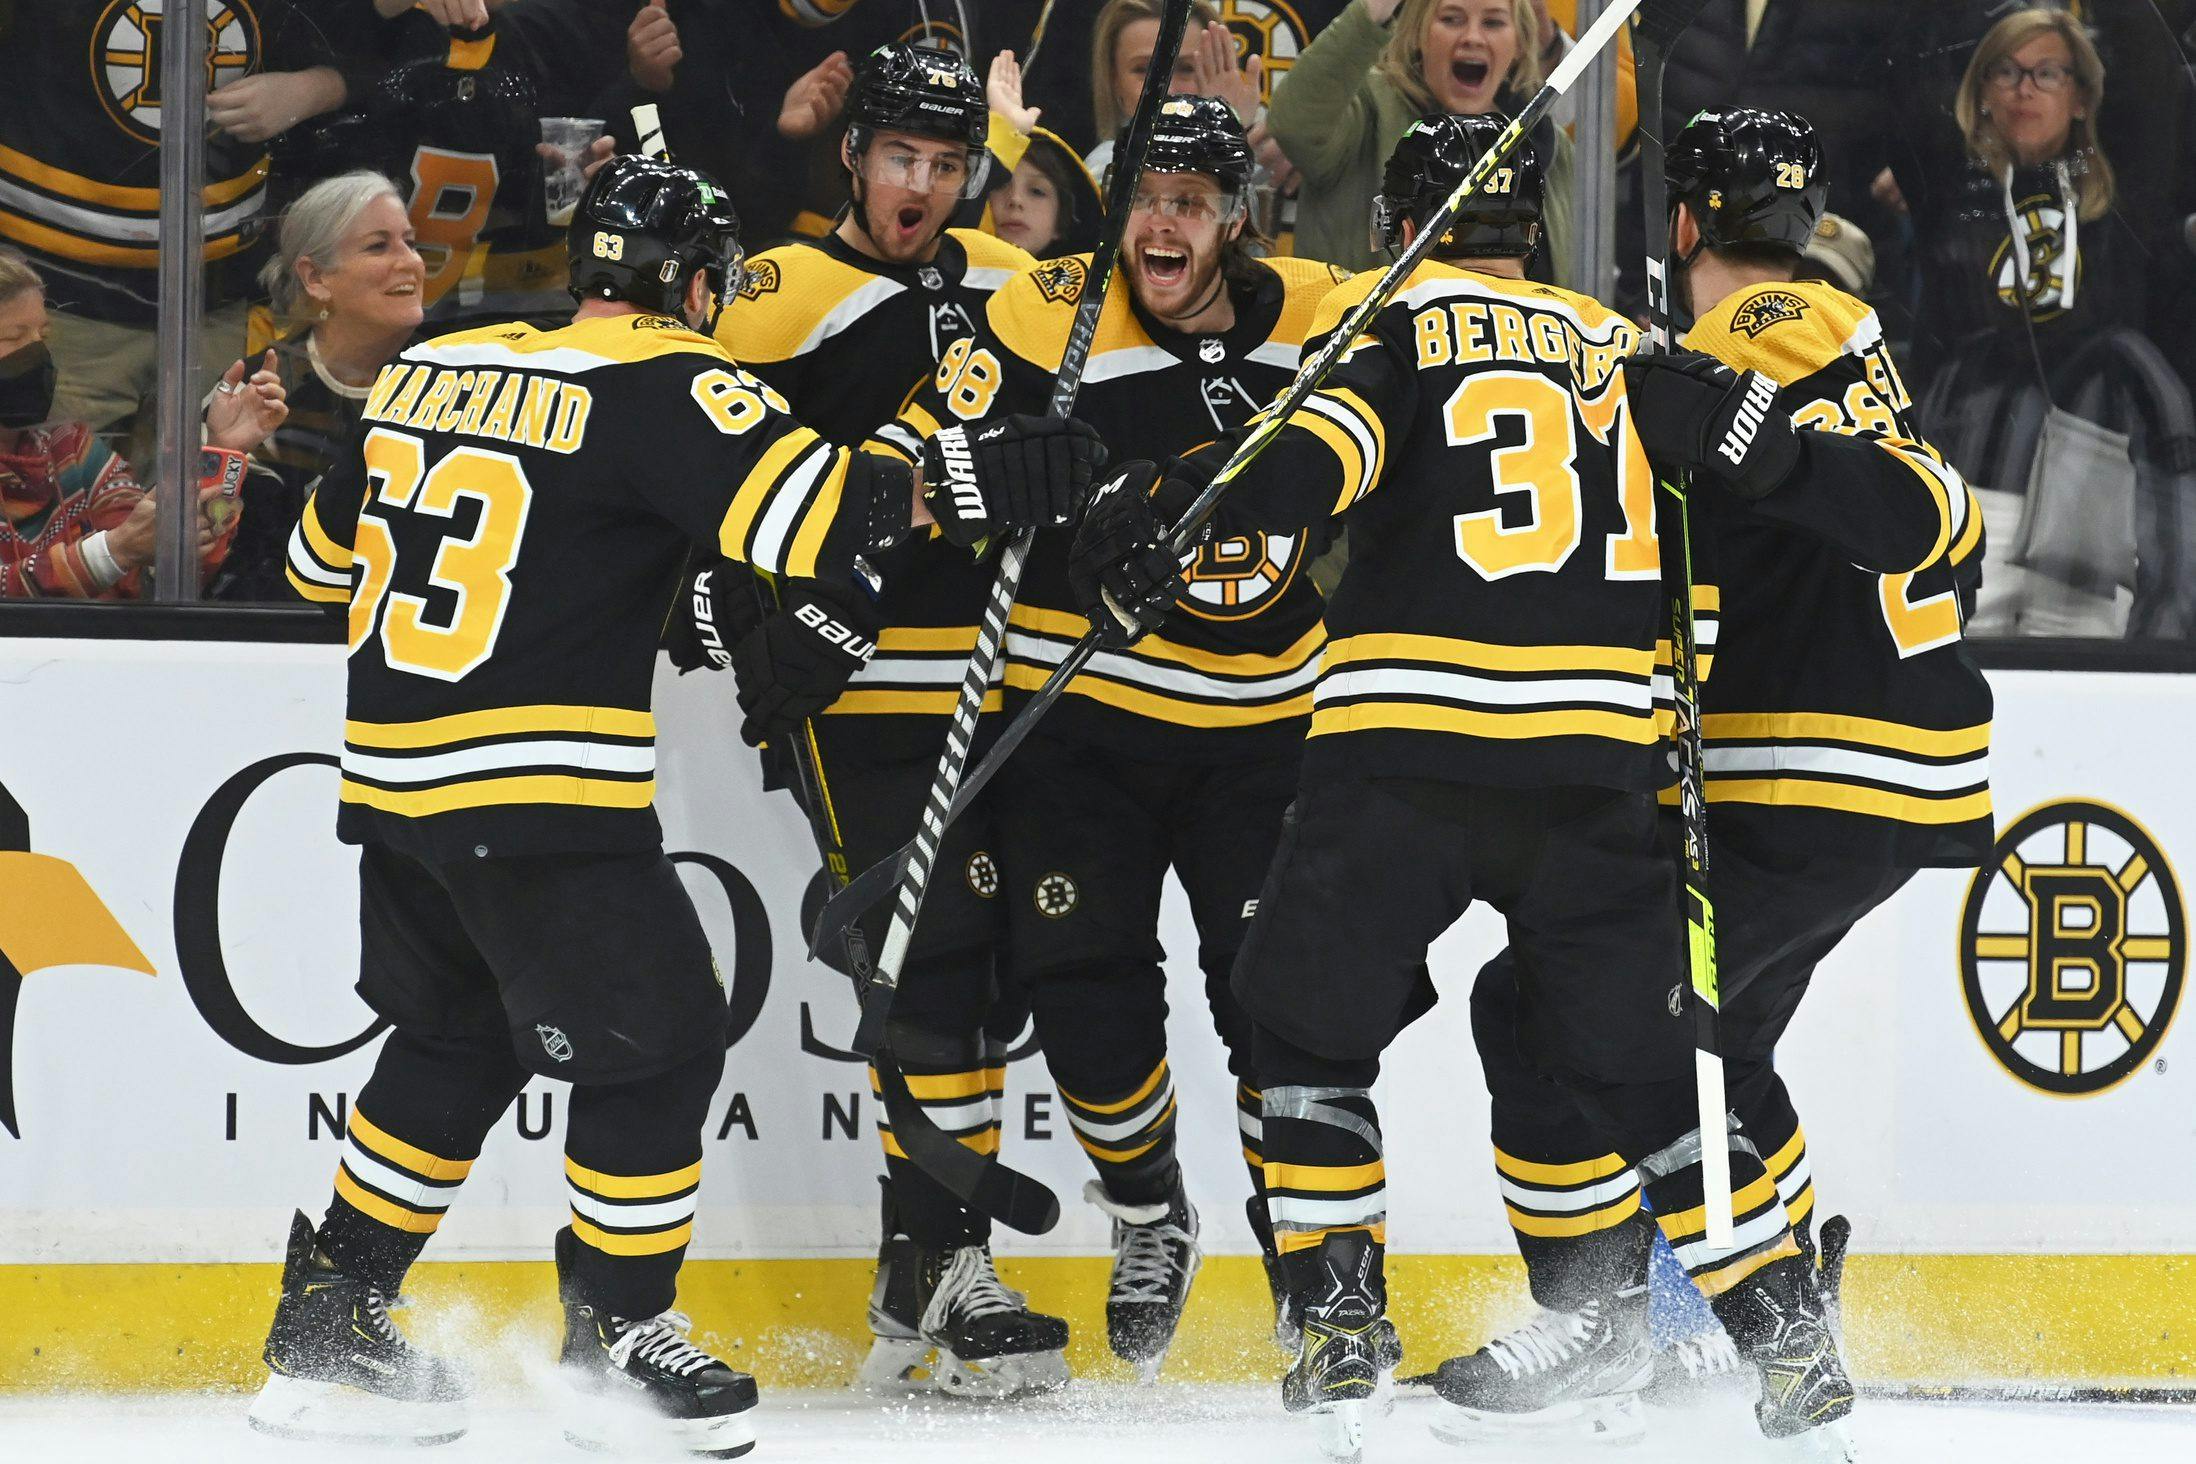 Bruins make major decision on Jake DeBrusk before NHL trade deadline